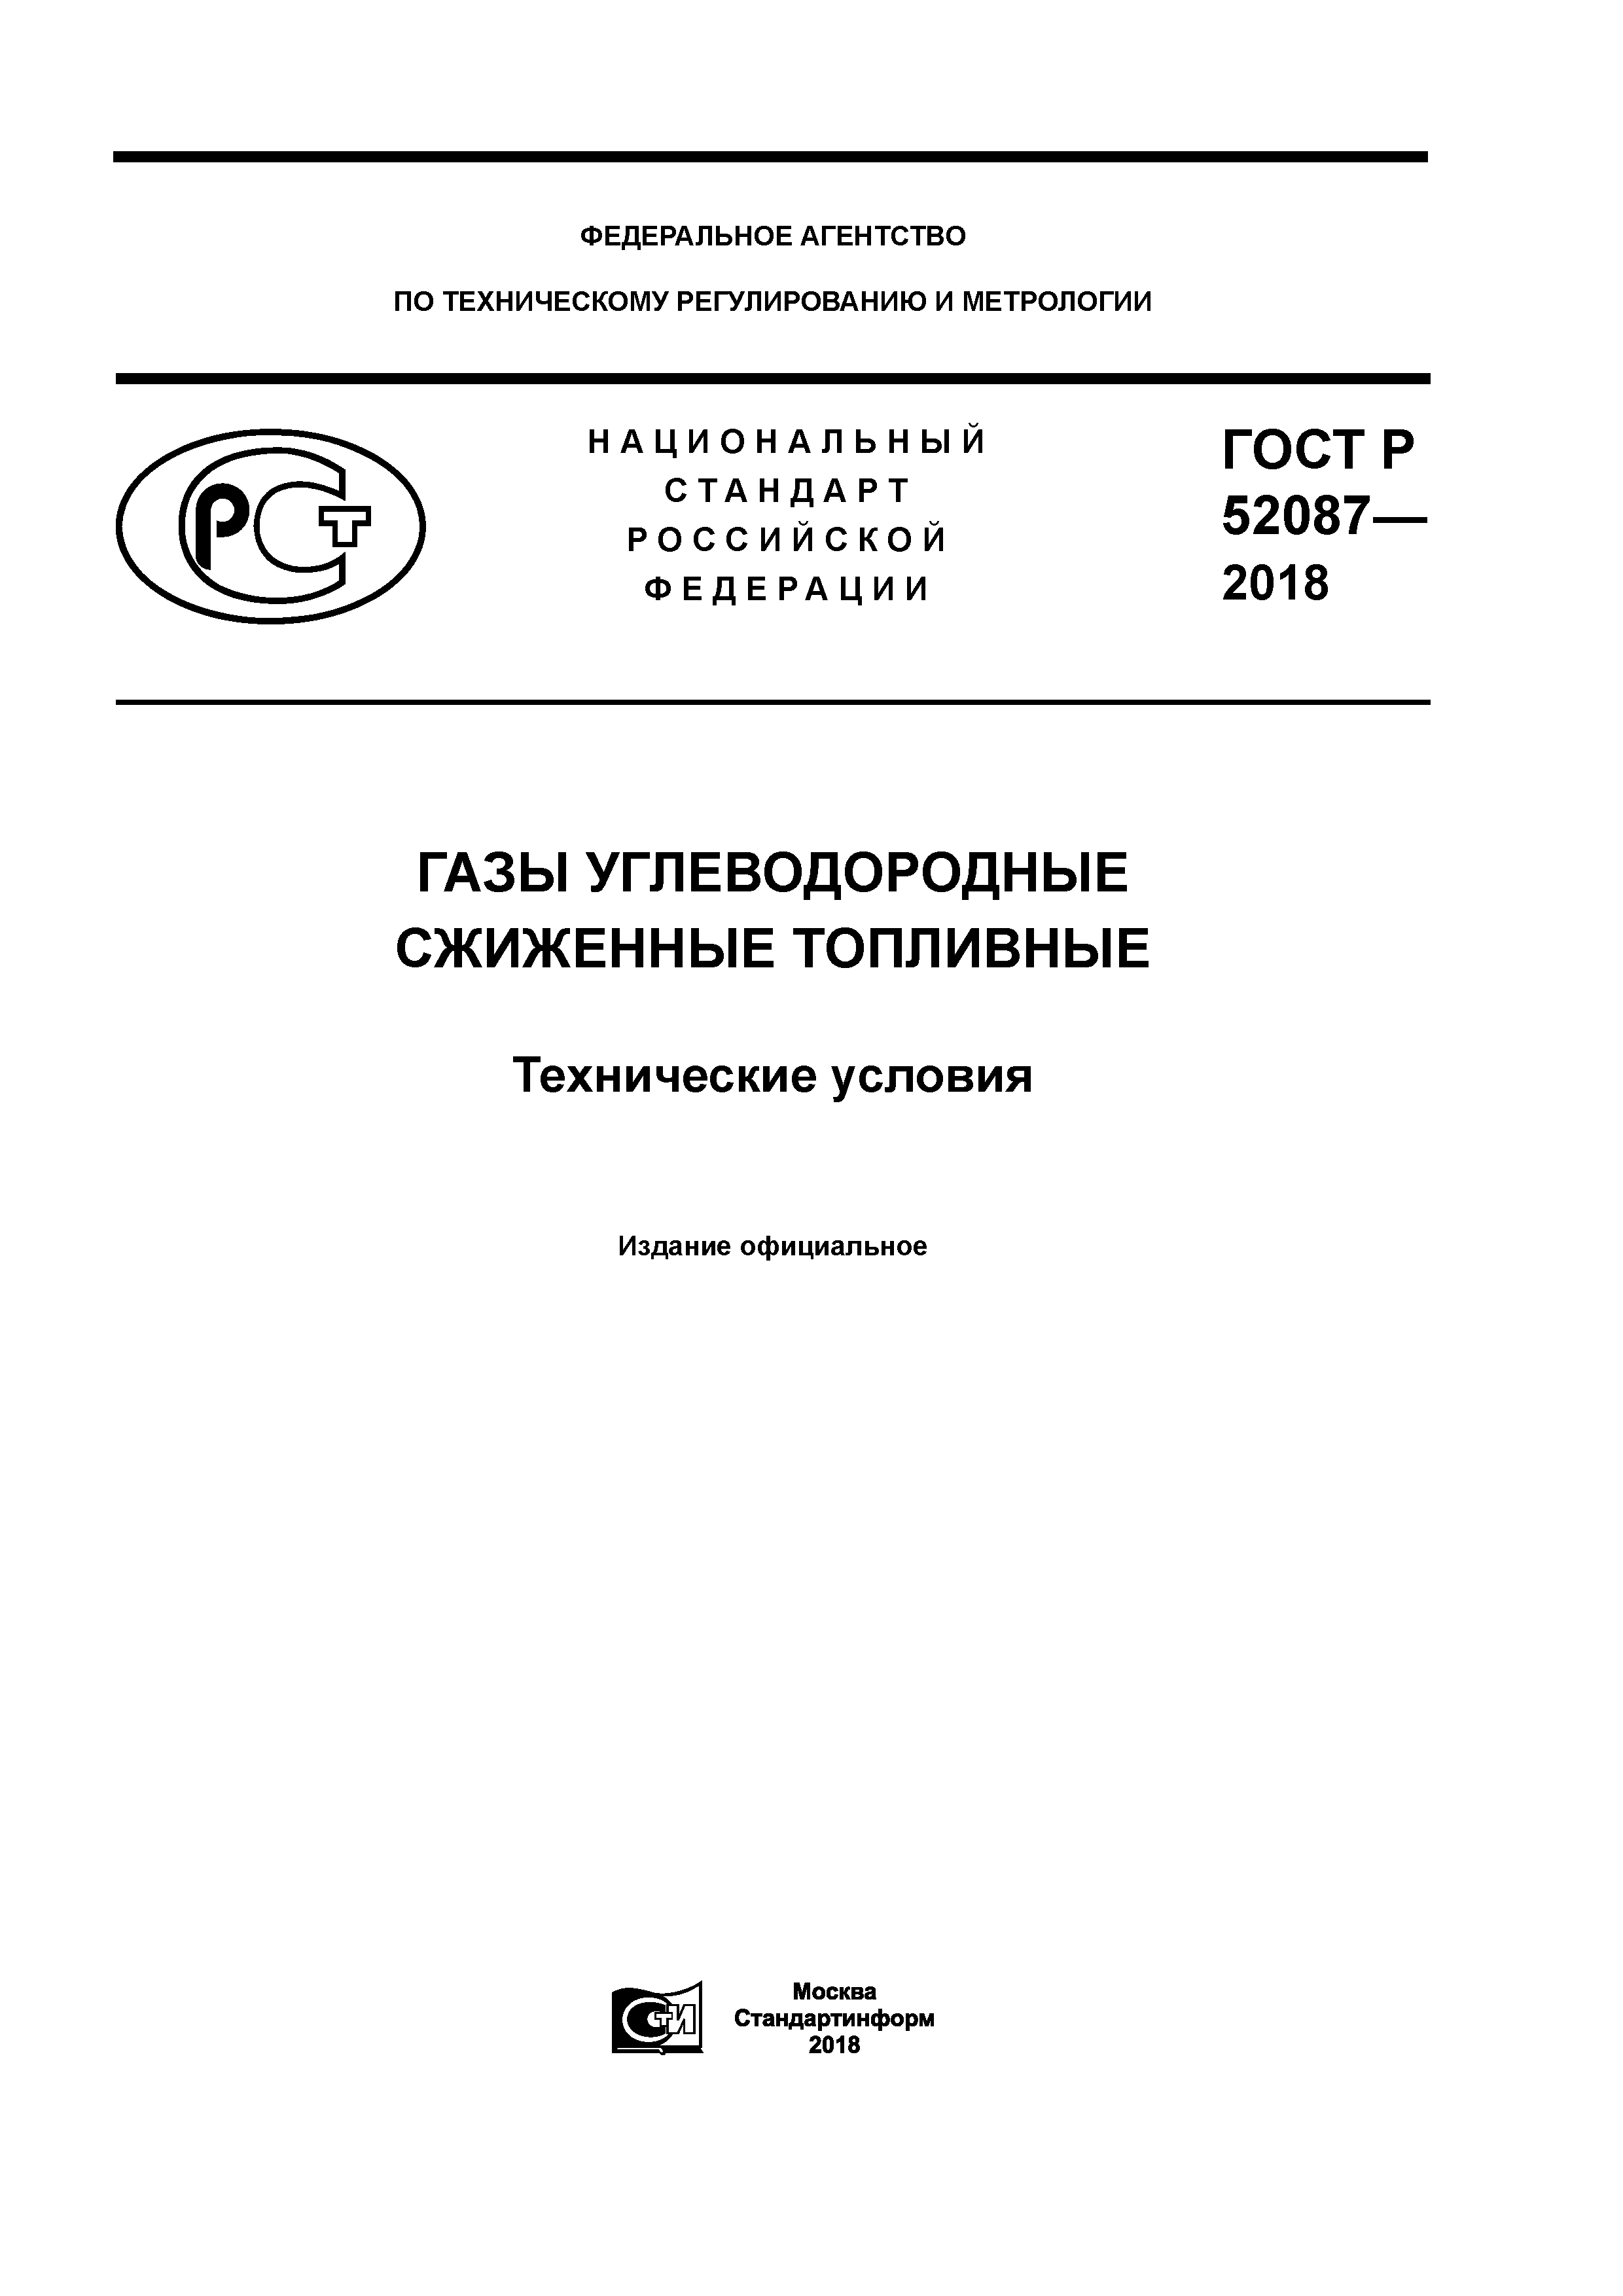 ГОСТ Р 52087-2018